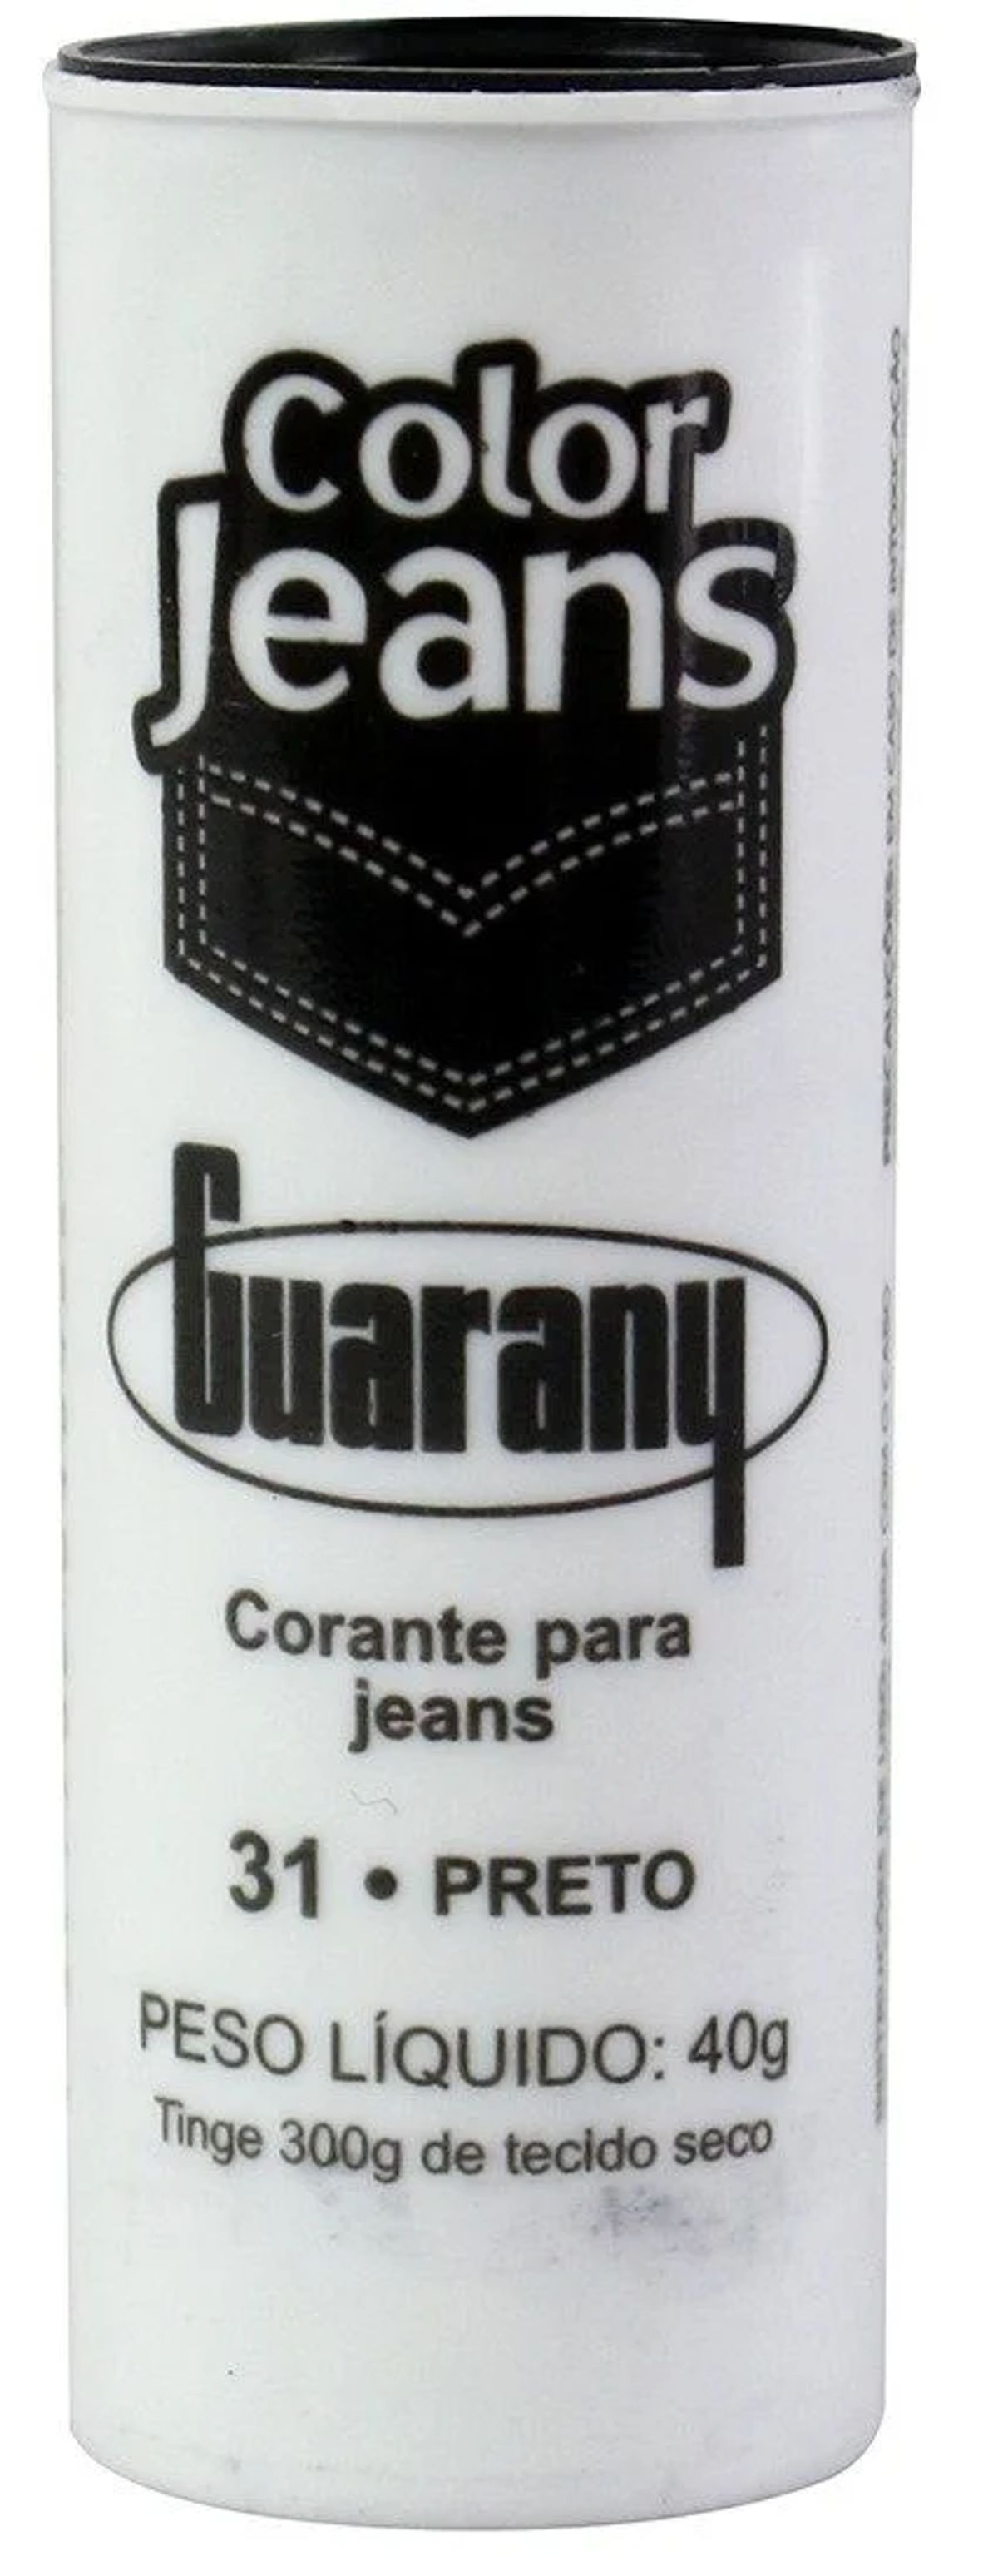 Corante Color Jeans Guarany Preto 40g image number 0